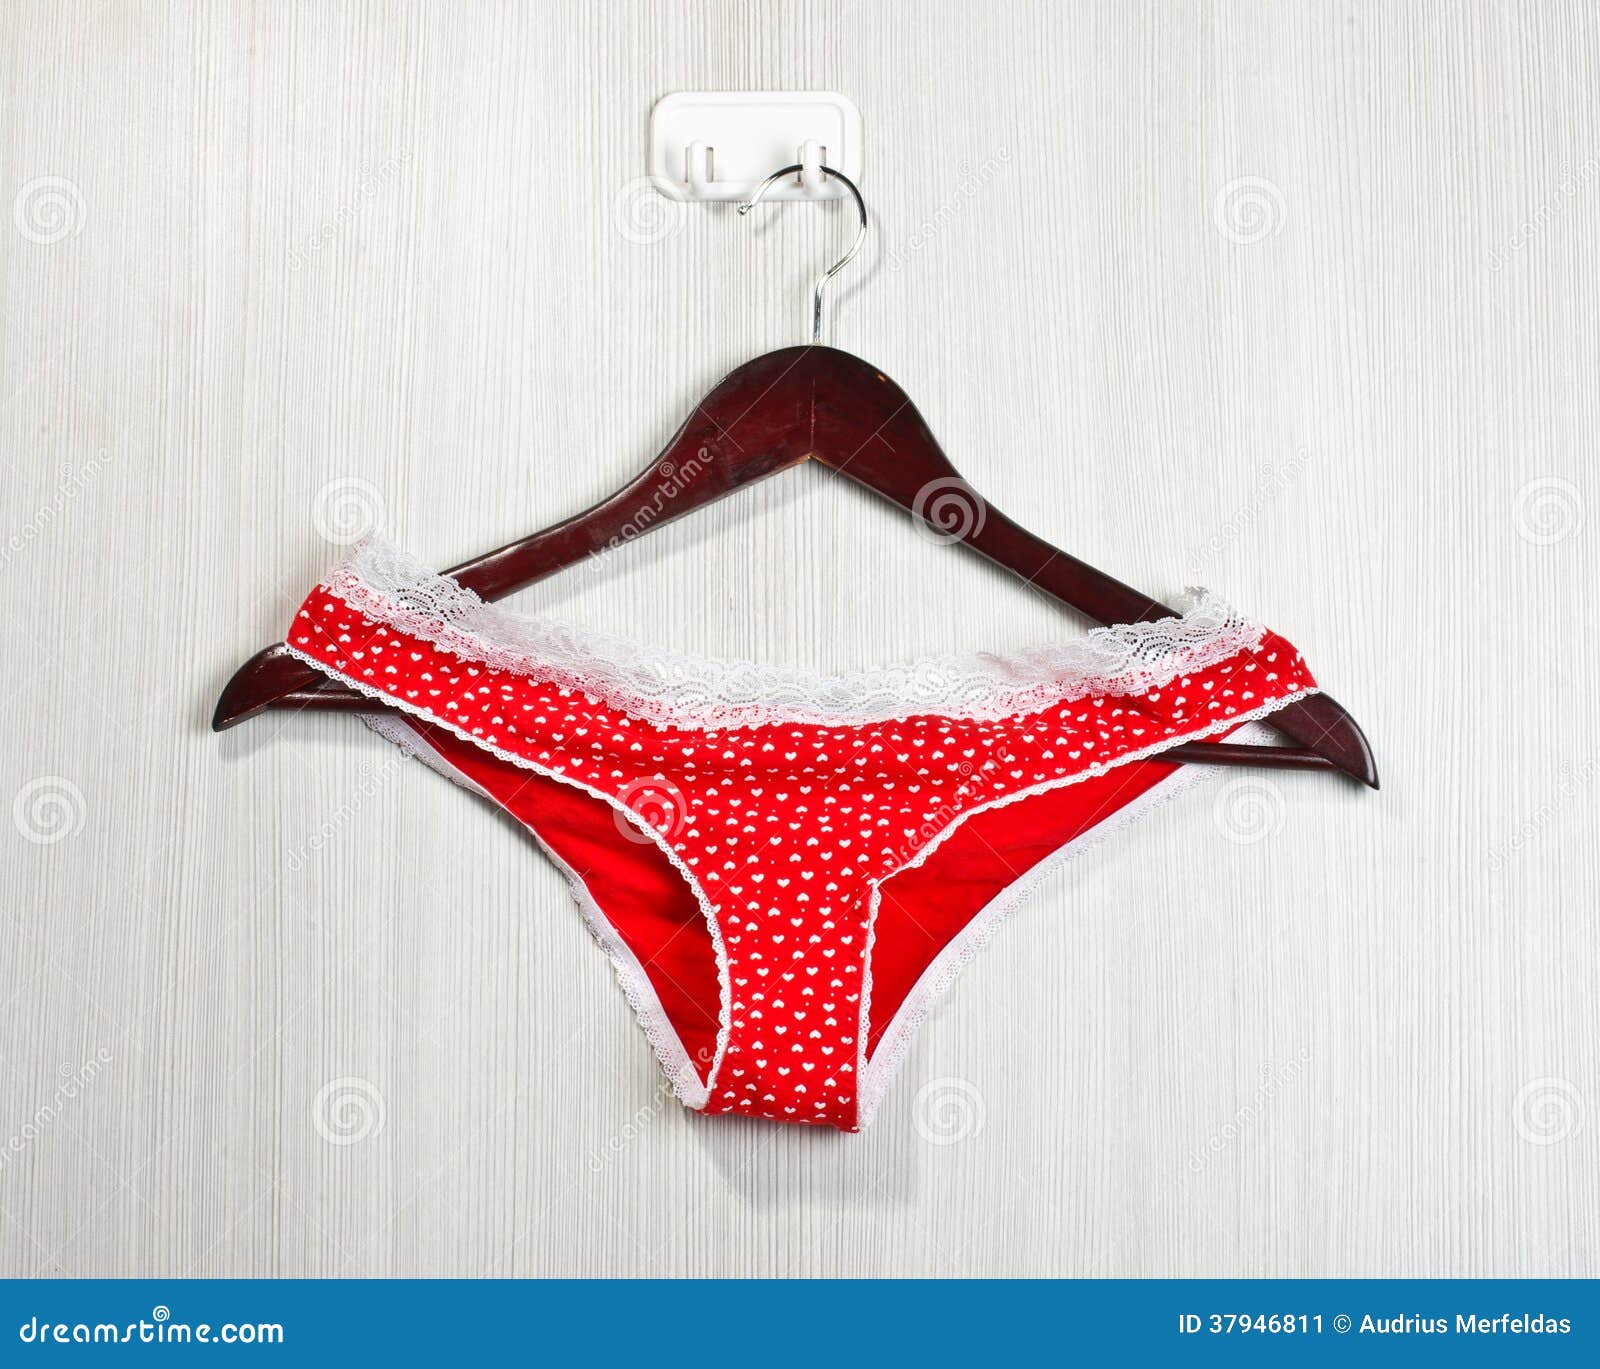 Red Female Underwear Valentine Day Present Stock Image - Image of